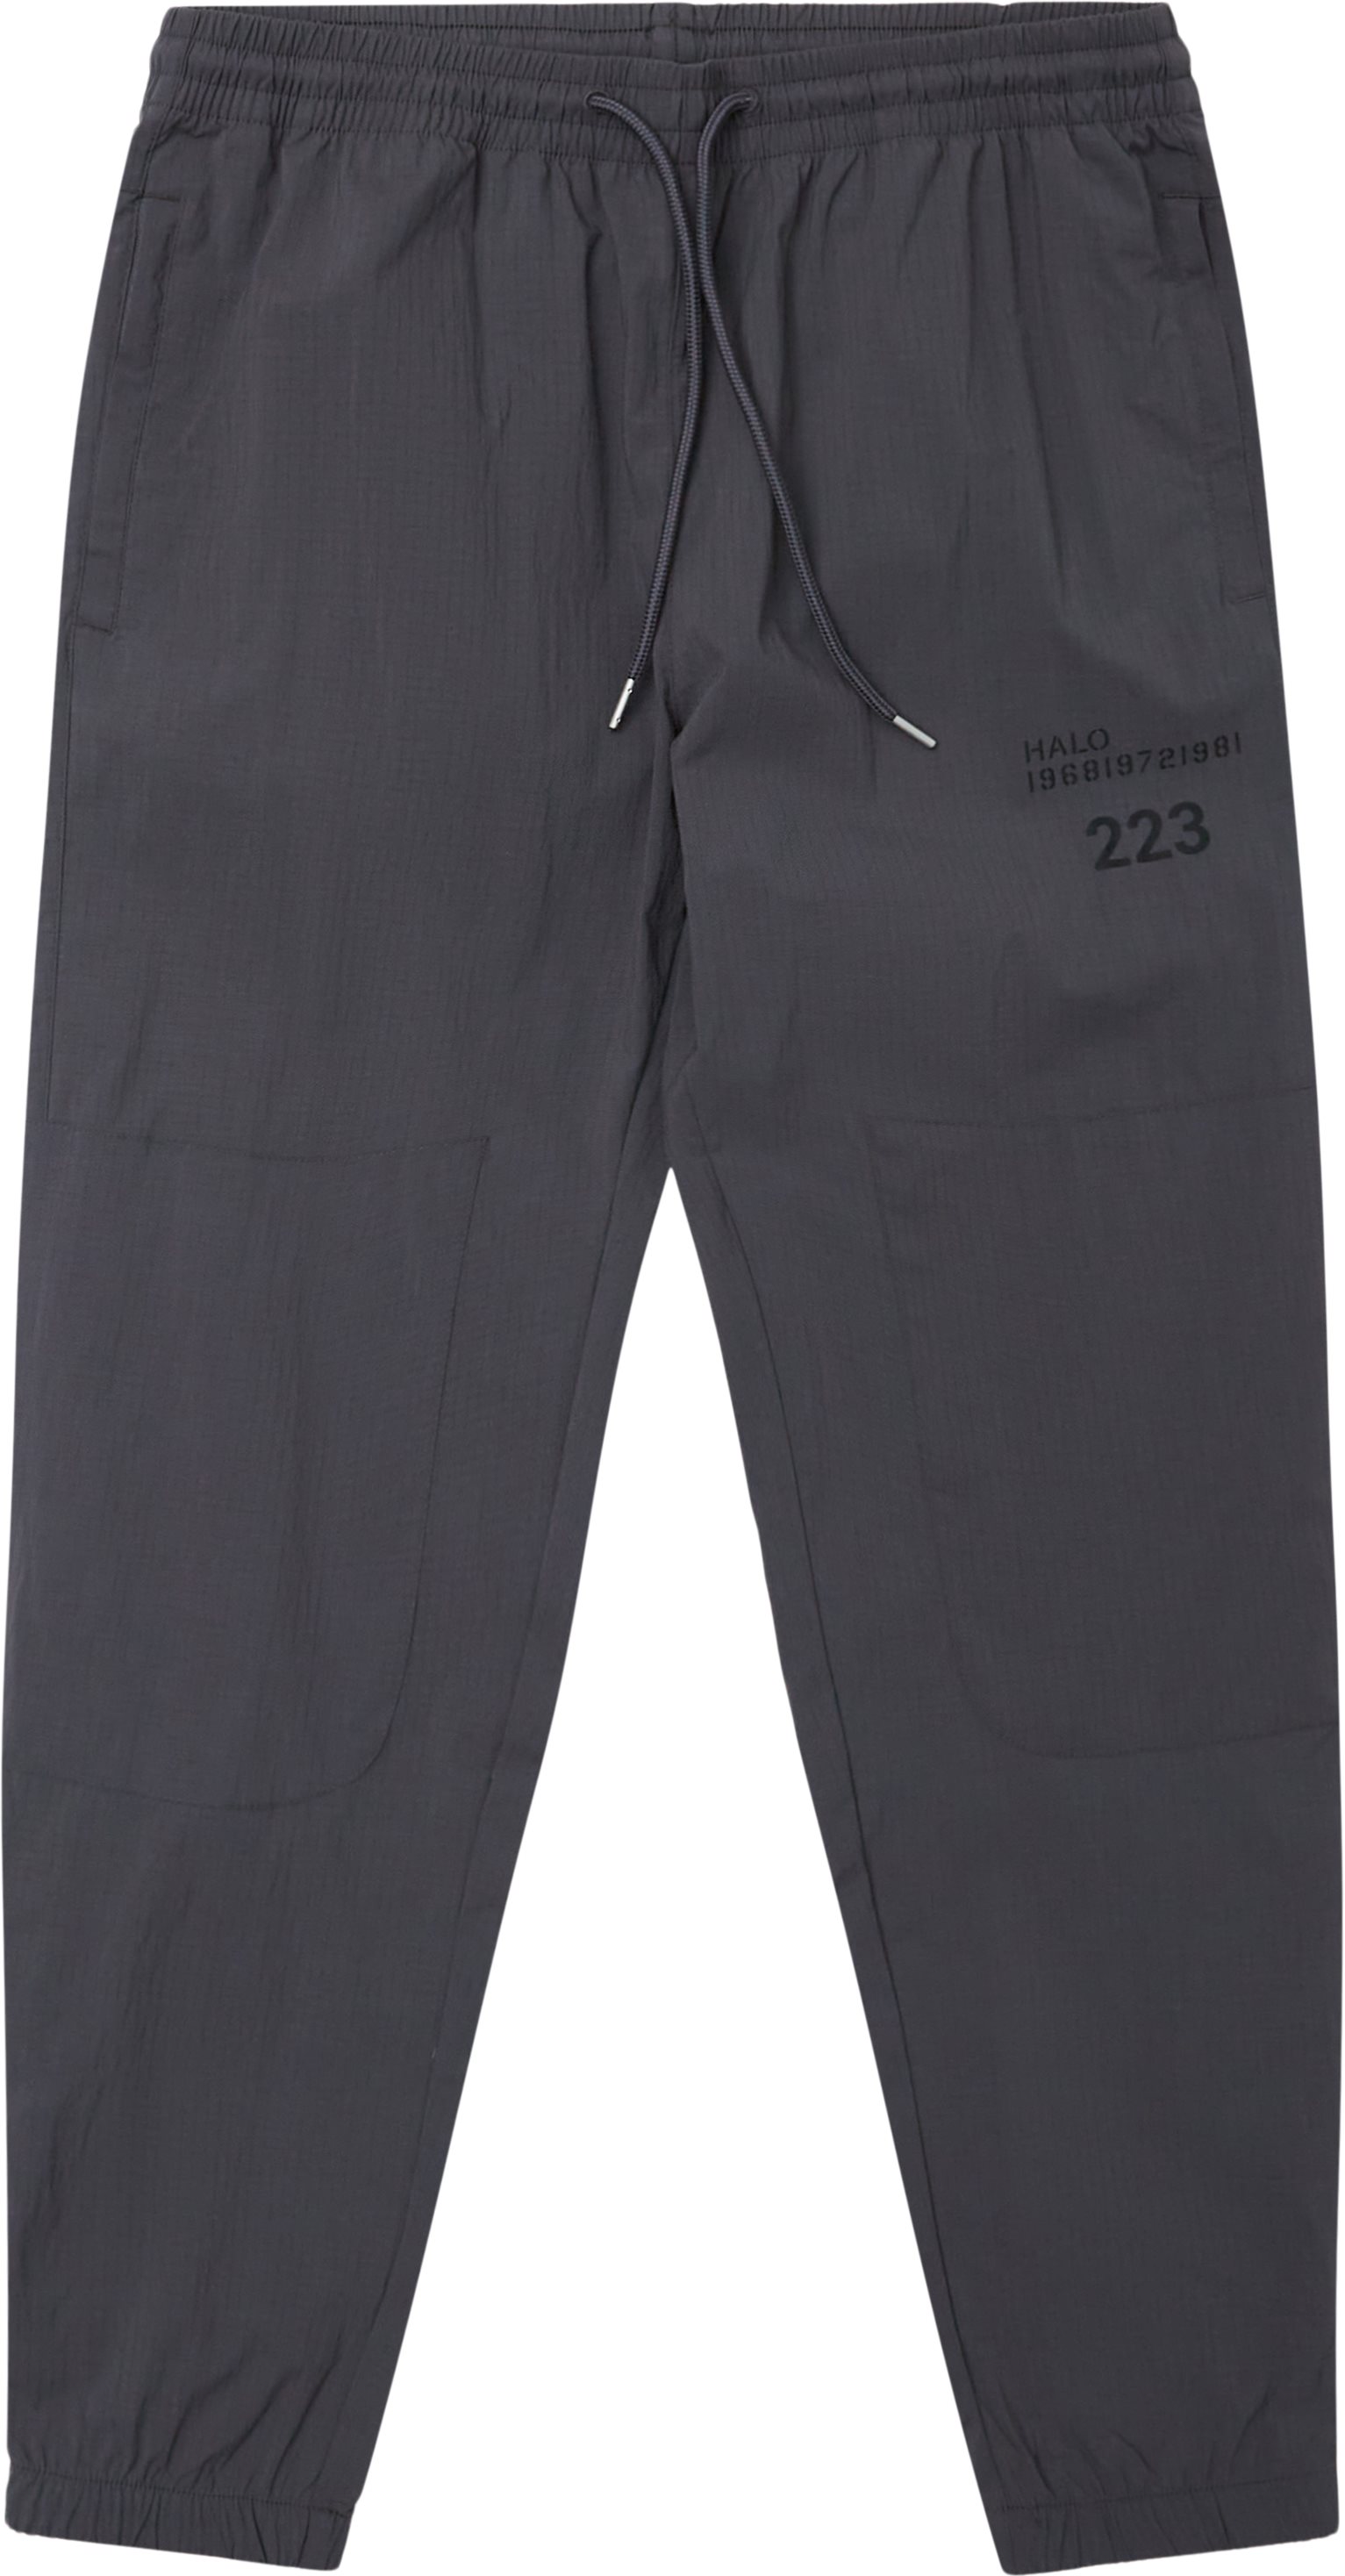 Field Pant - Trousers - Regular fit - Grey